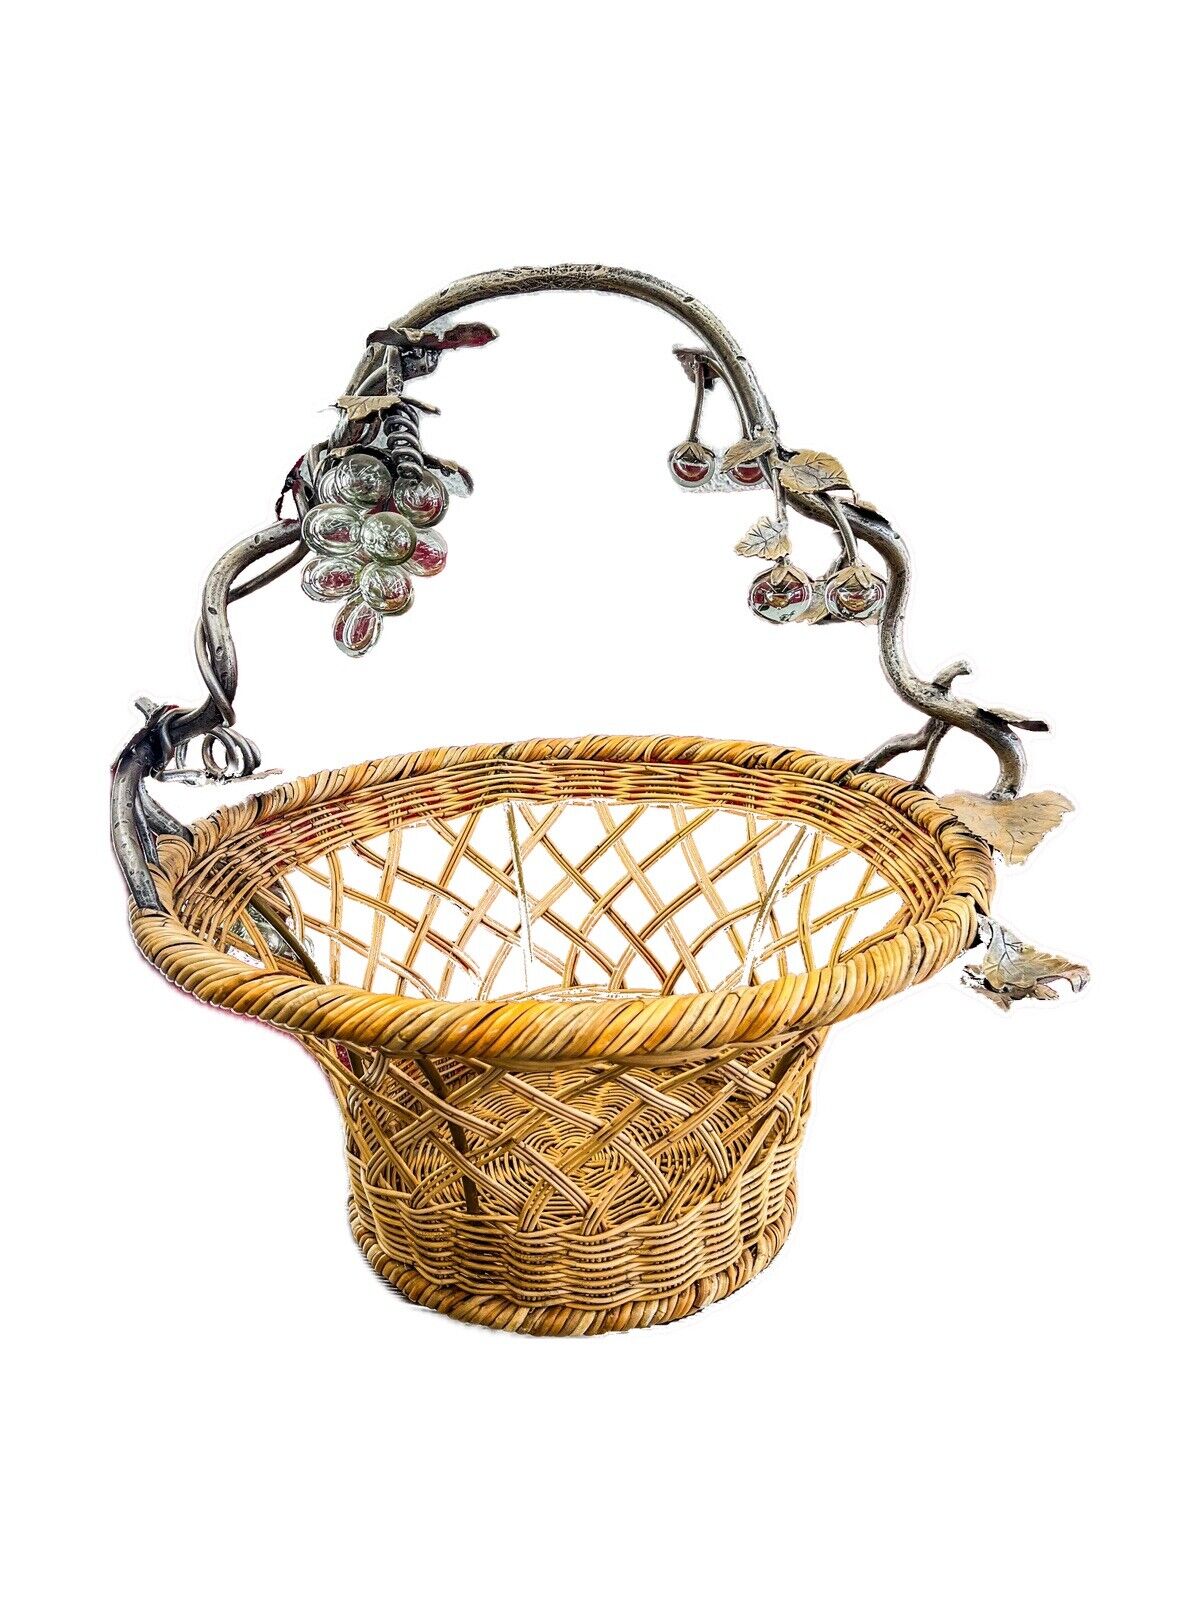 Rattan Basket With Metal Handle And Glass Grapes